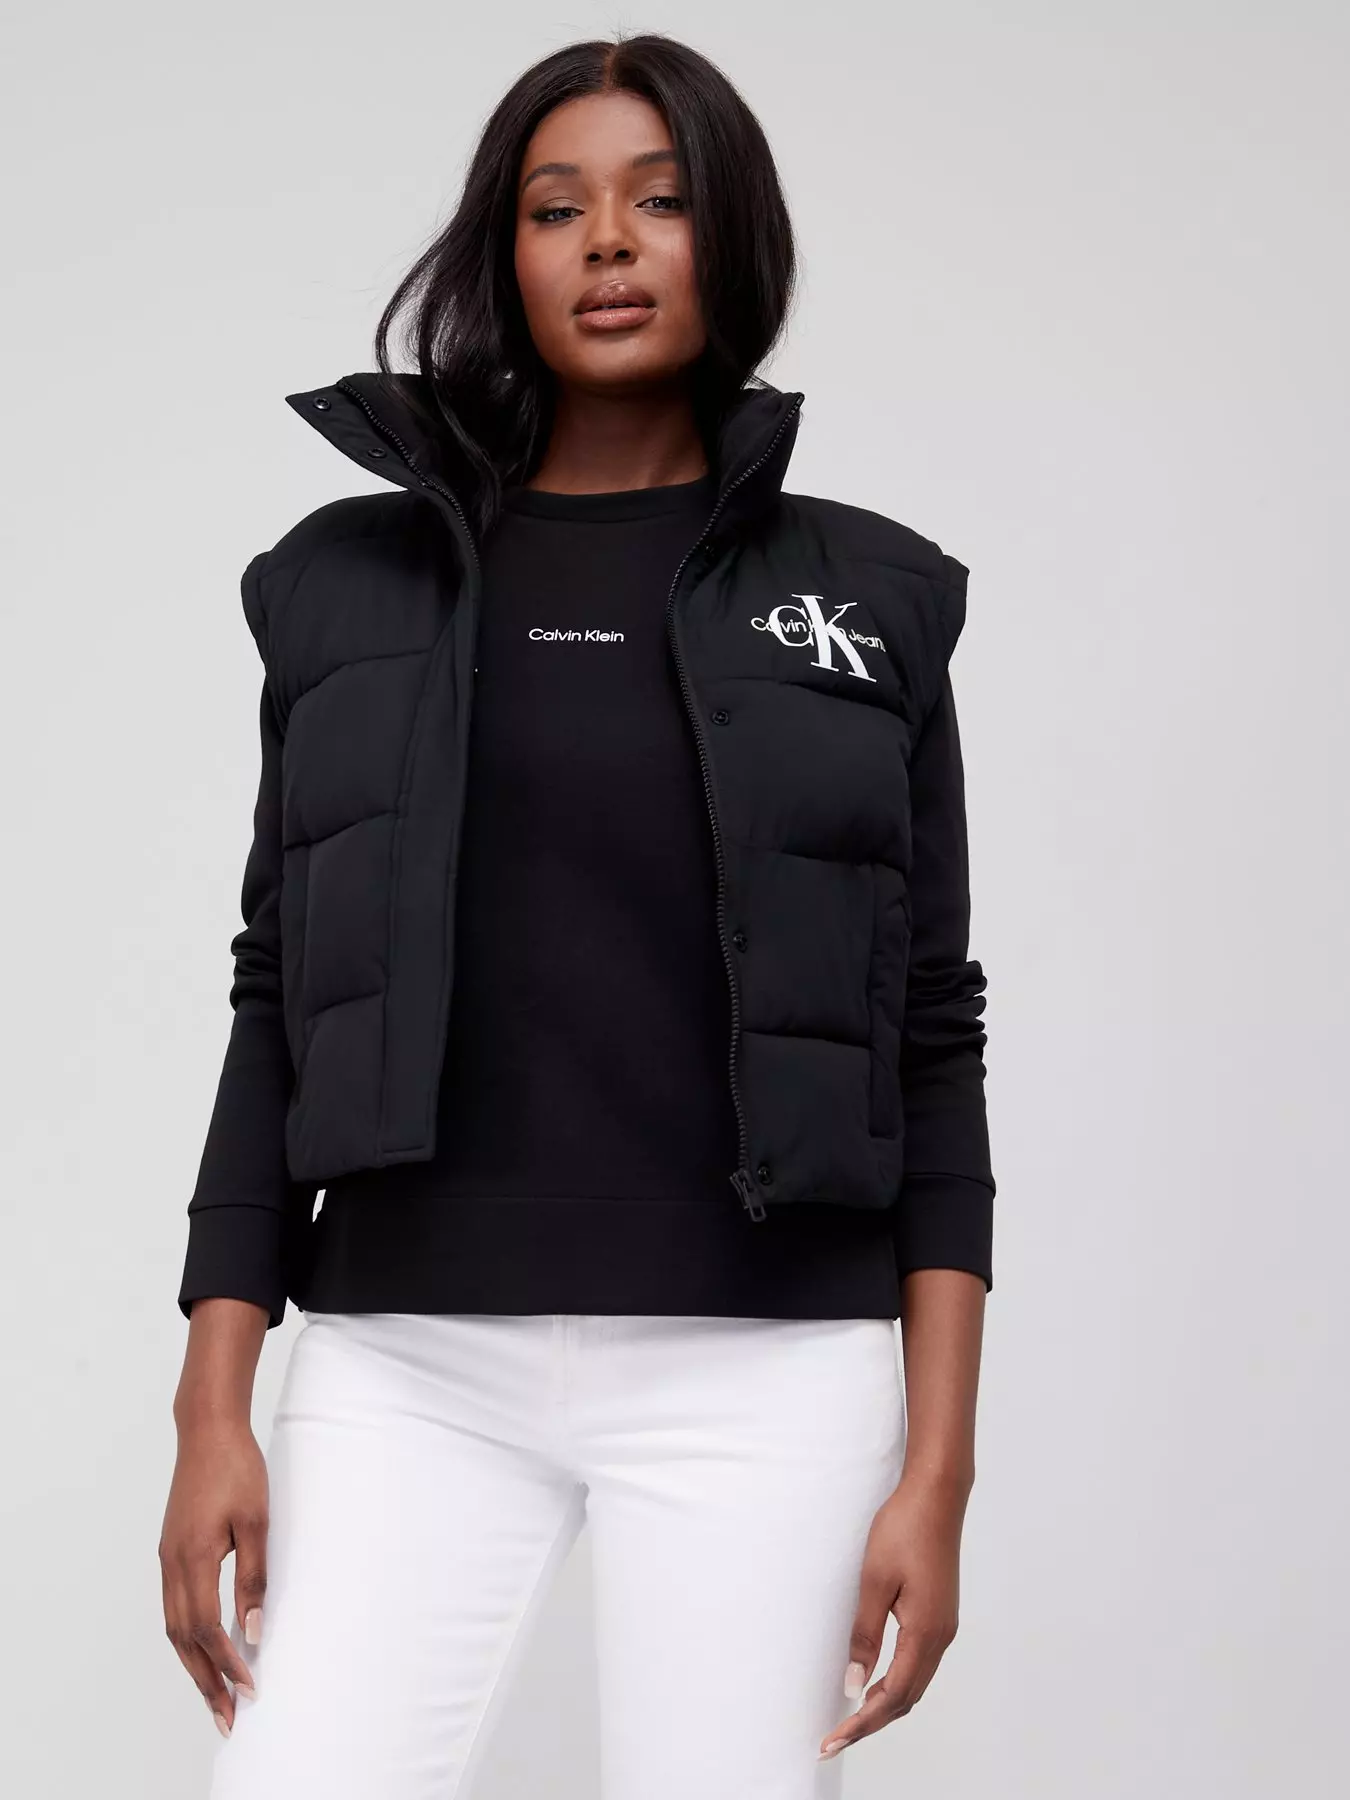 Women's Coats Jackets Women's Outerwear Calvin Klein® 